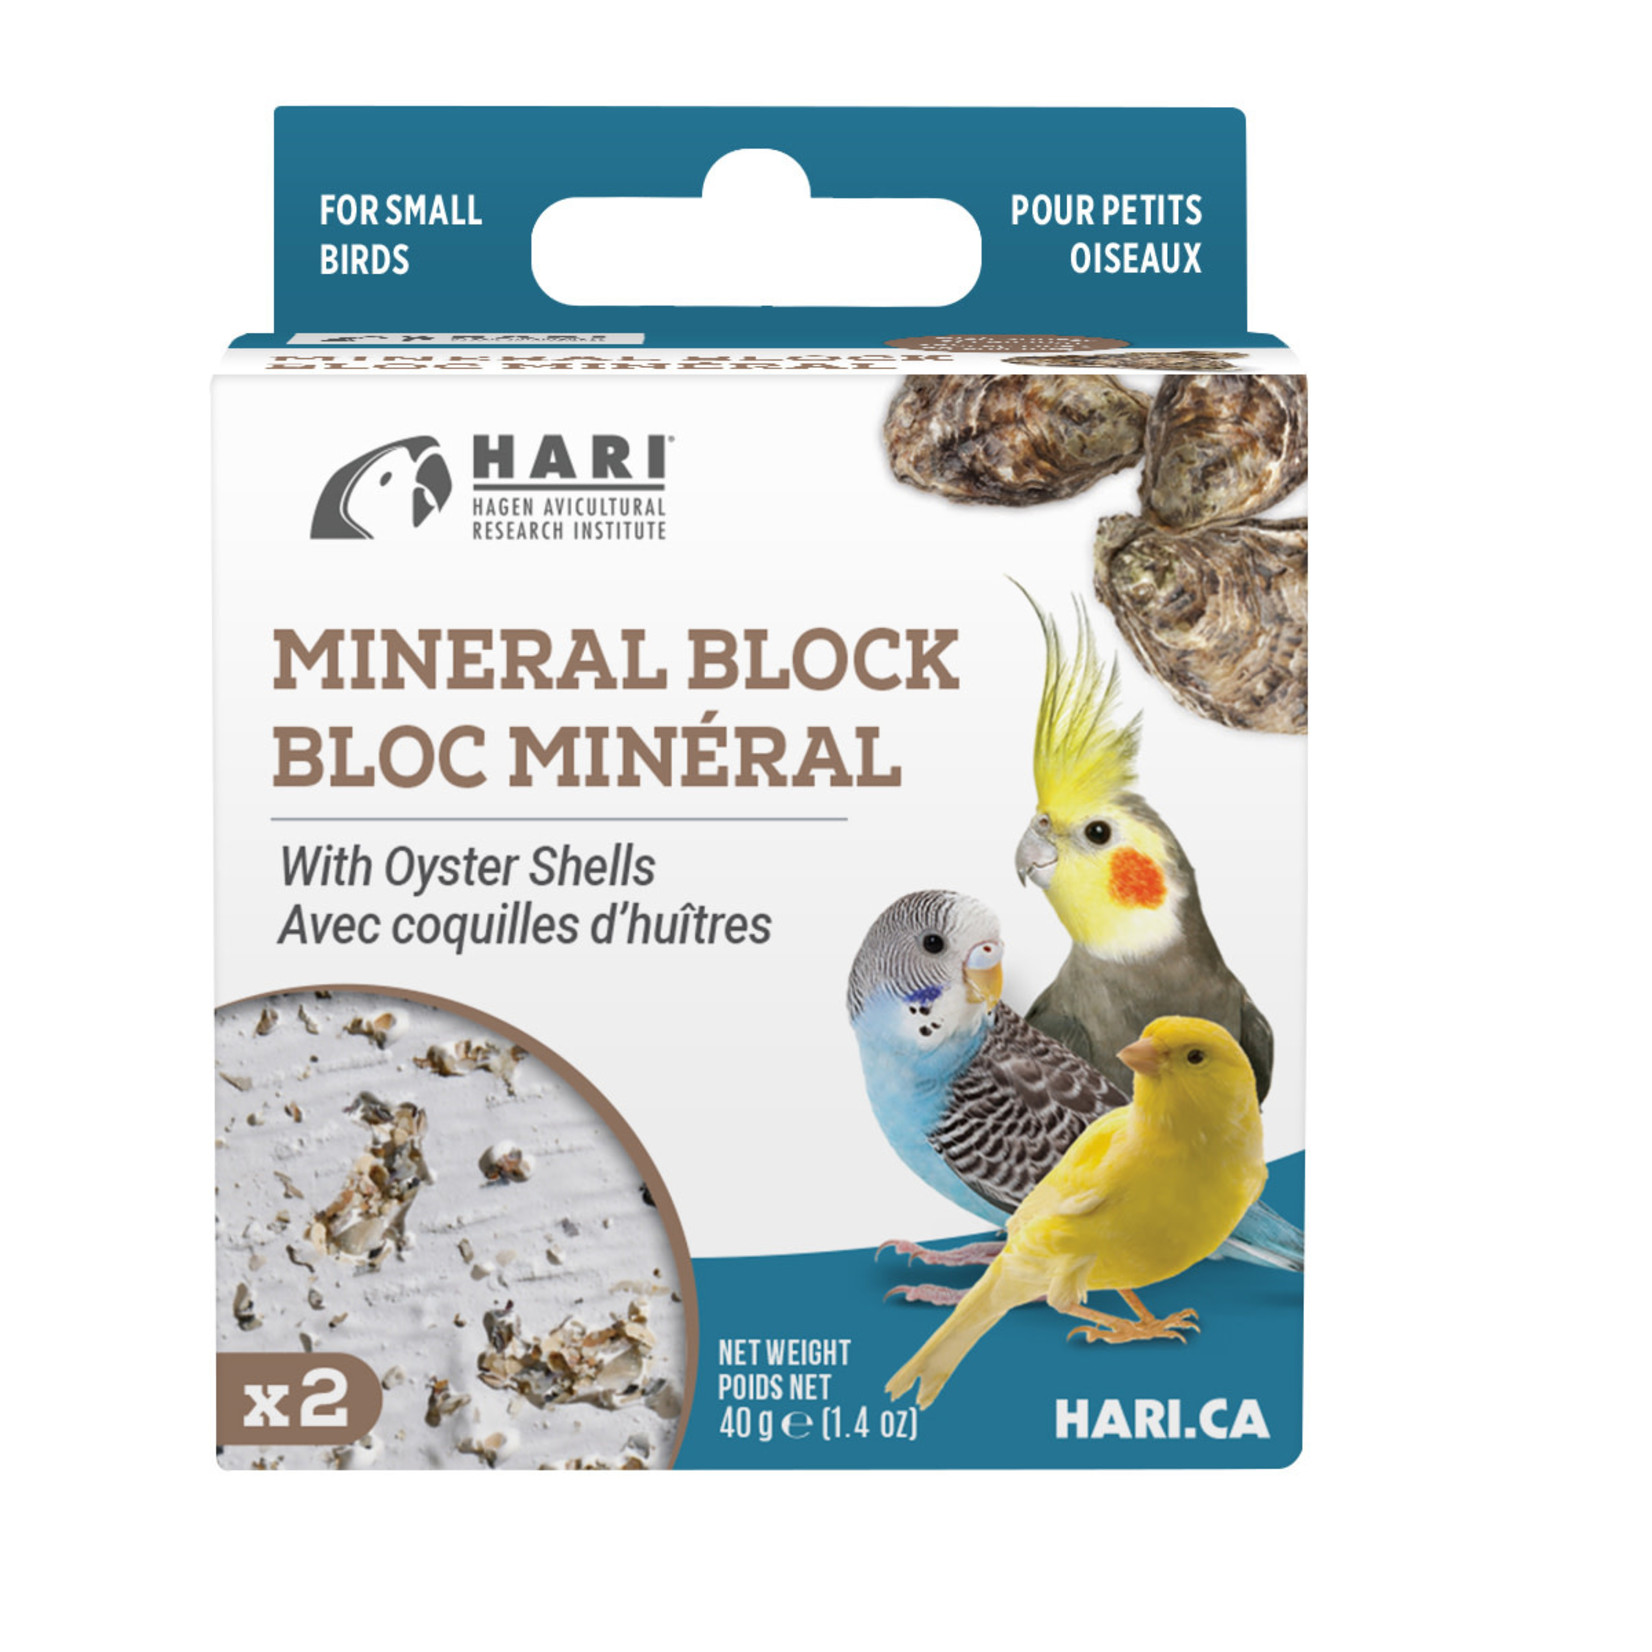 HARI HARI Mineral Block for Small Birds - Oyster Shells - 40 g - 2 pack